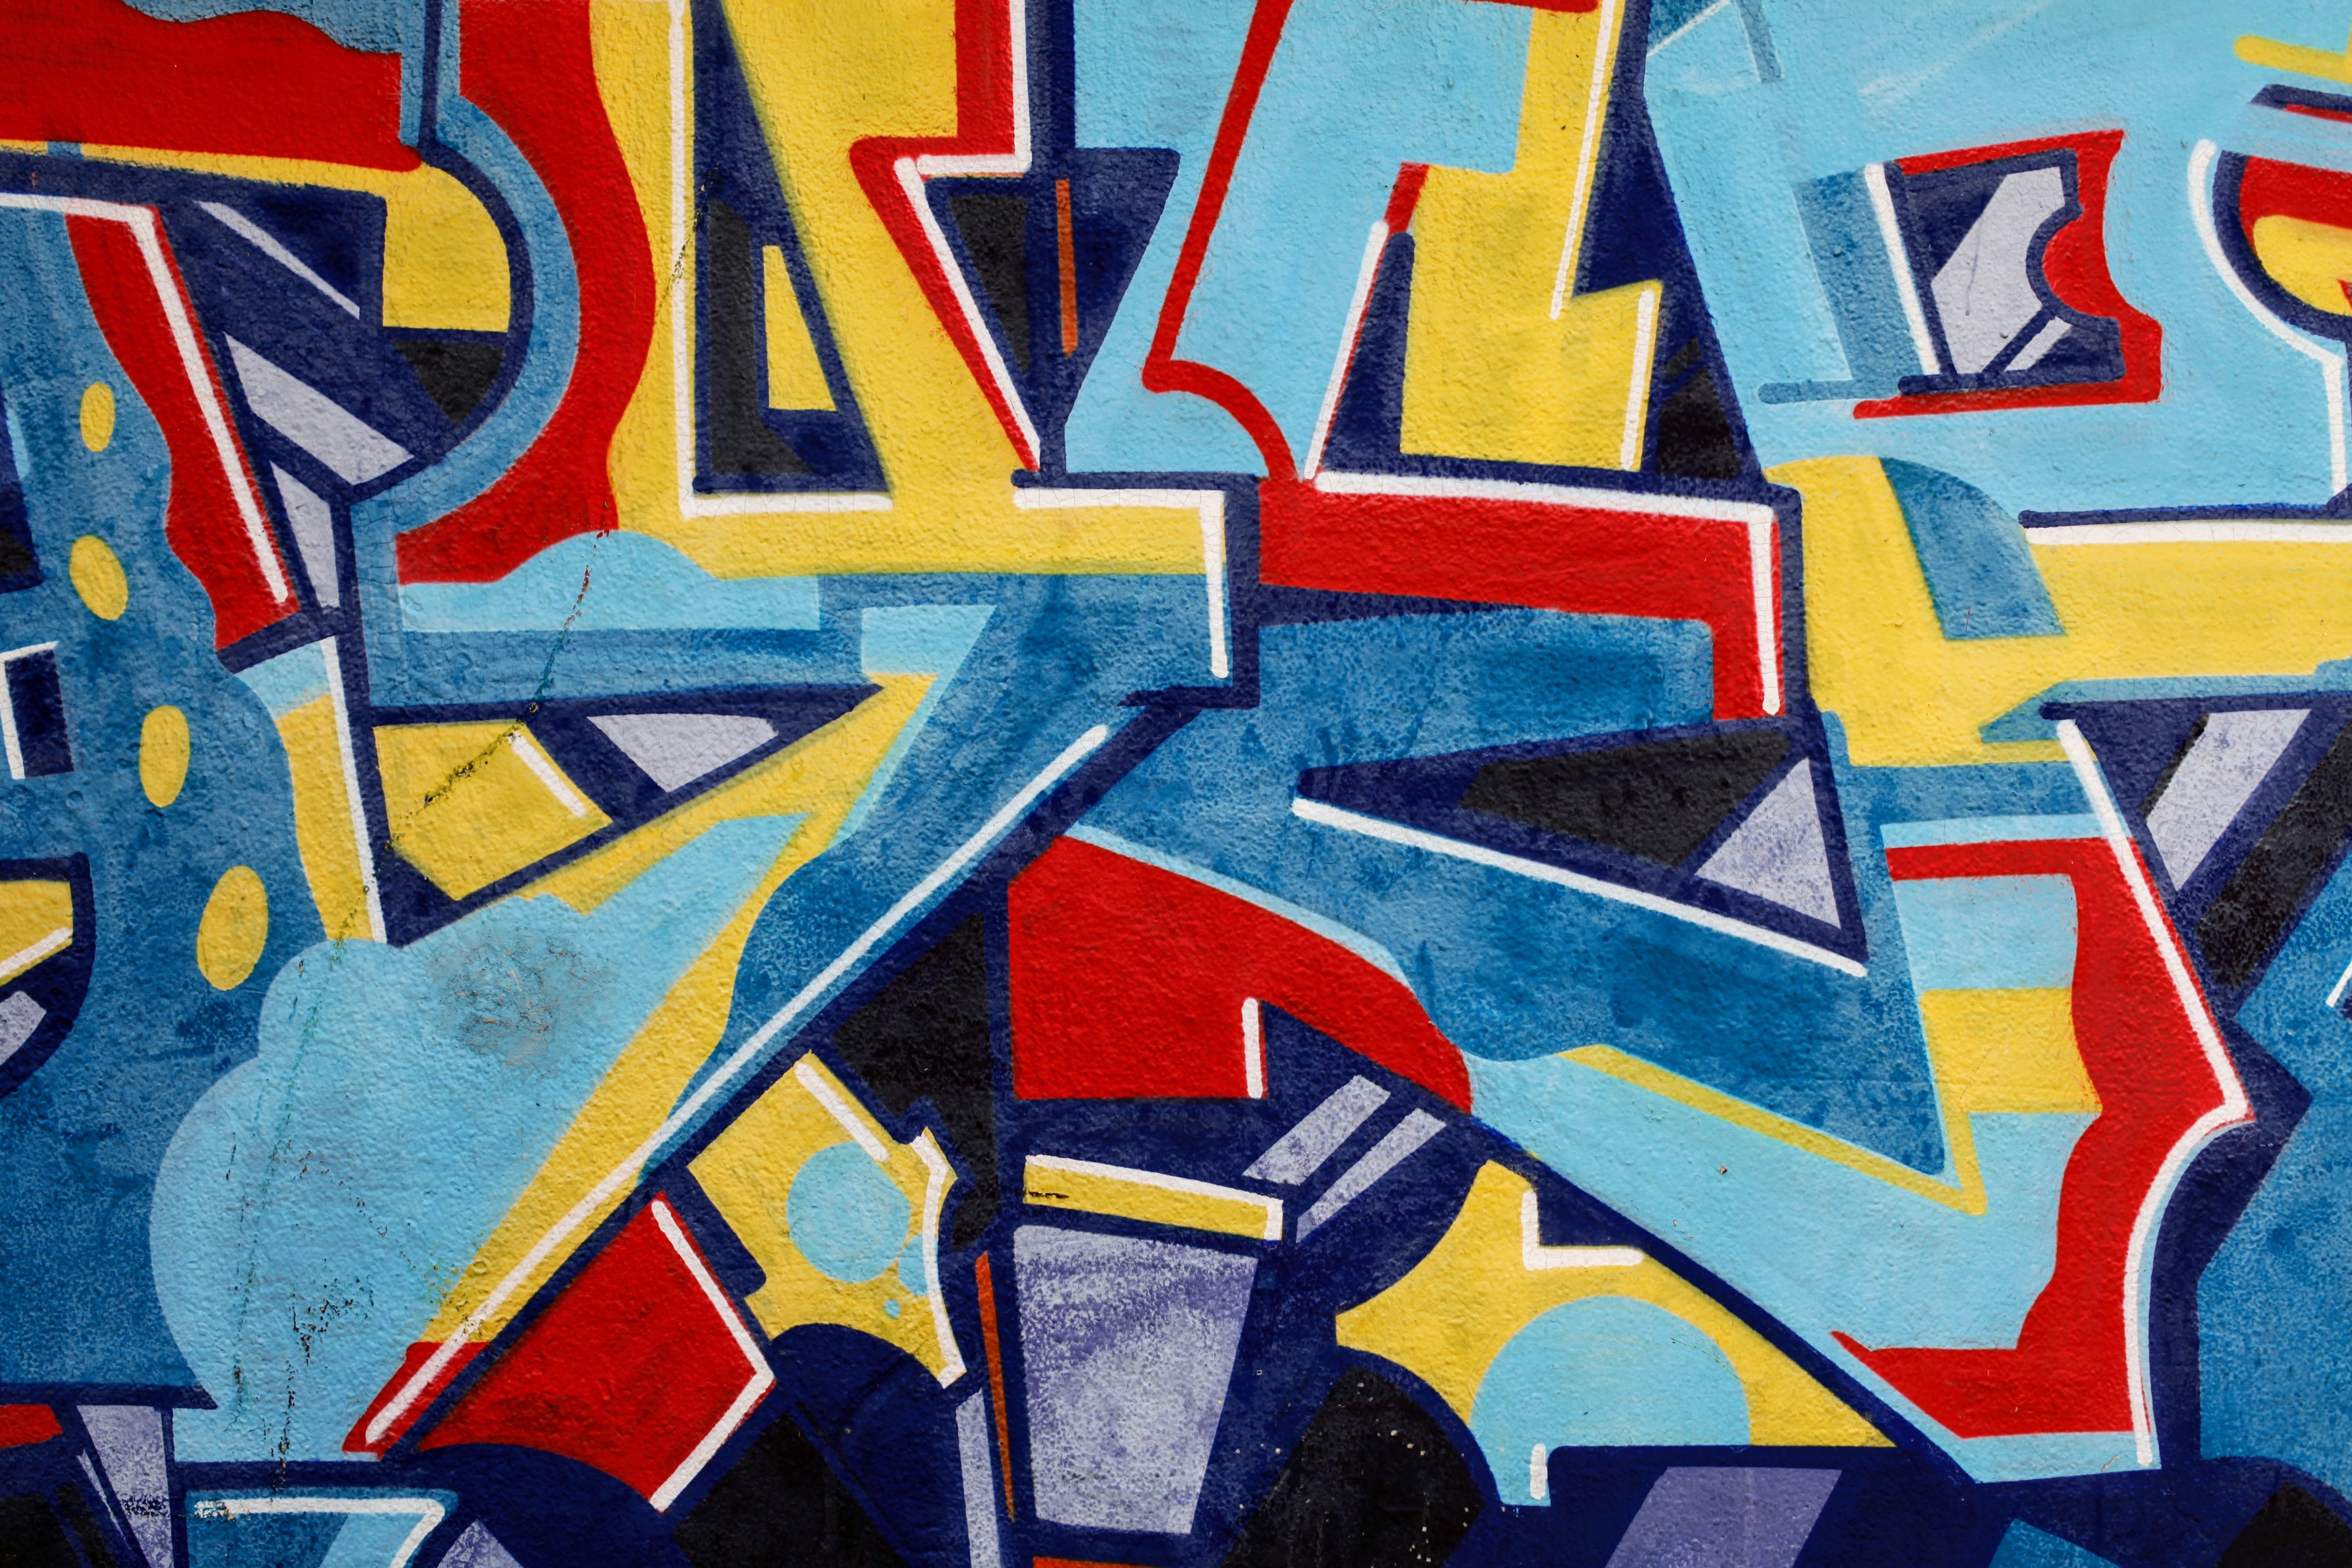 graffiti, symbols, characters, miscellanea, miscellaneous, paint, wall, letters